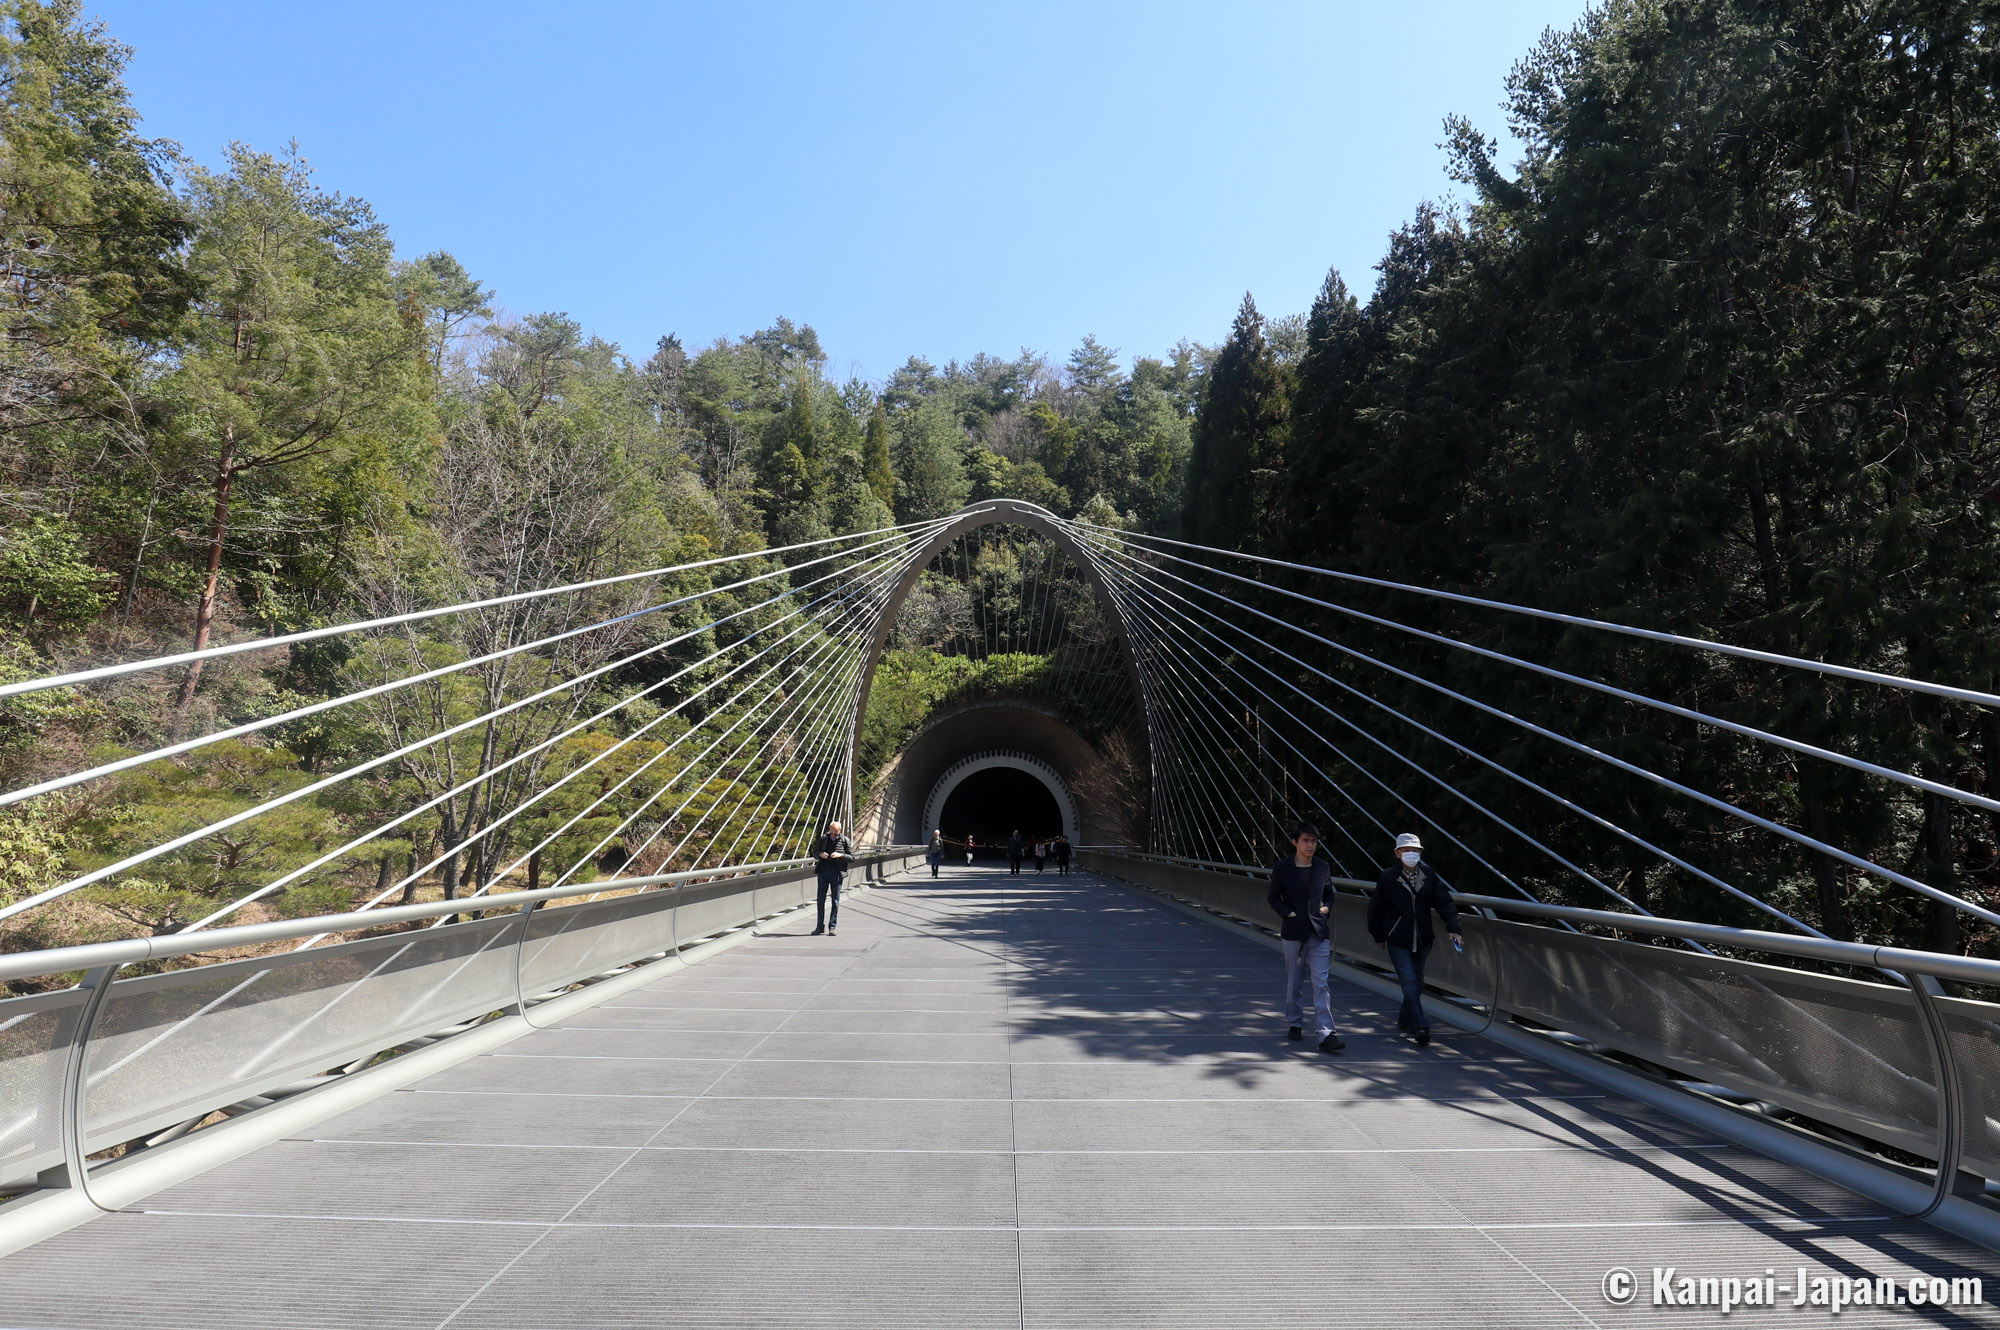 Miho Museum bridge and tunnel, Tunnel exit and bridge leadi…